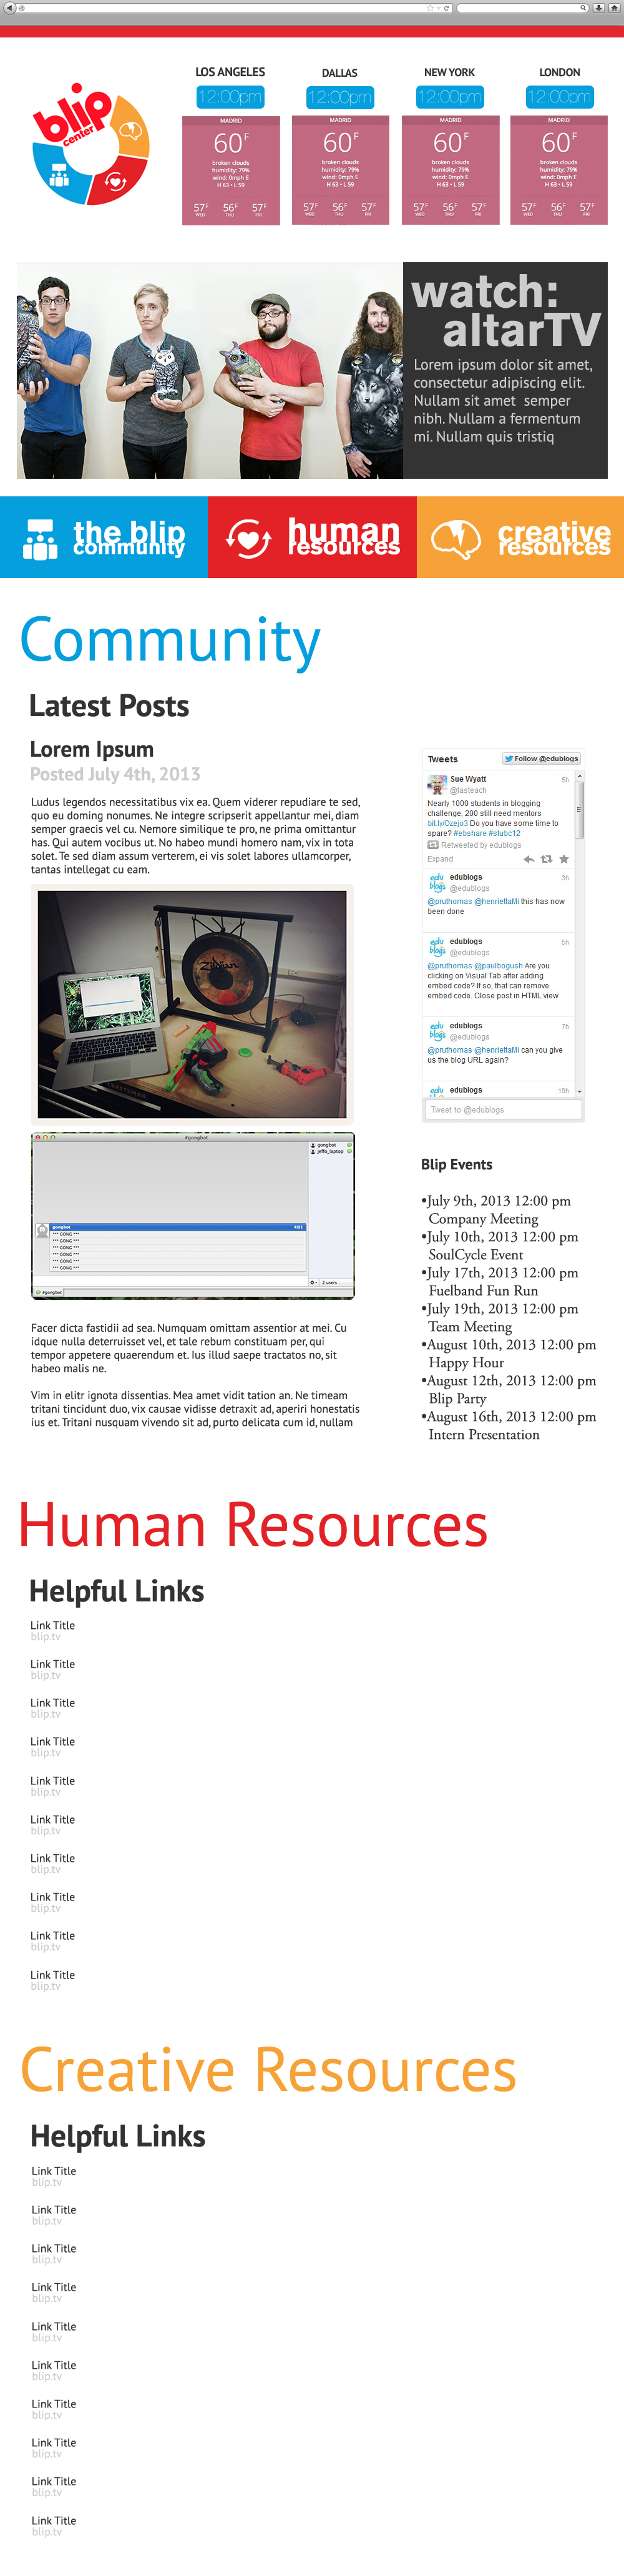 Web Website design human resources internal Blog community mock creative twitter widget Event company